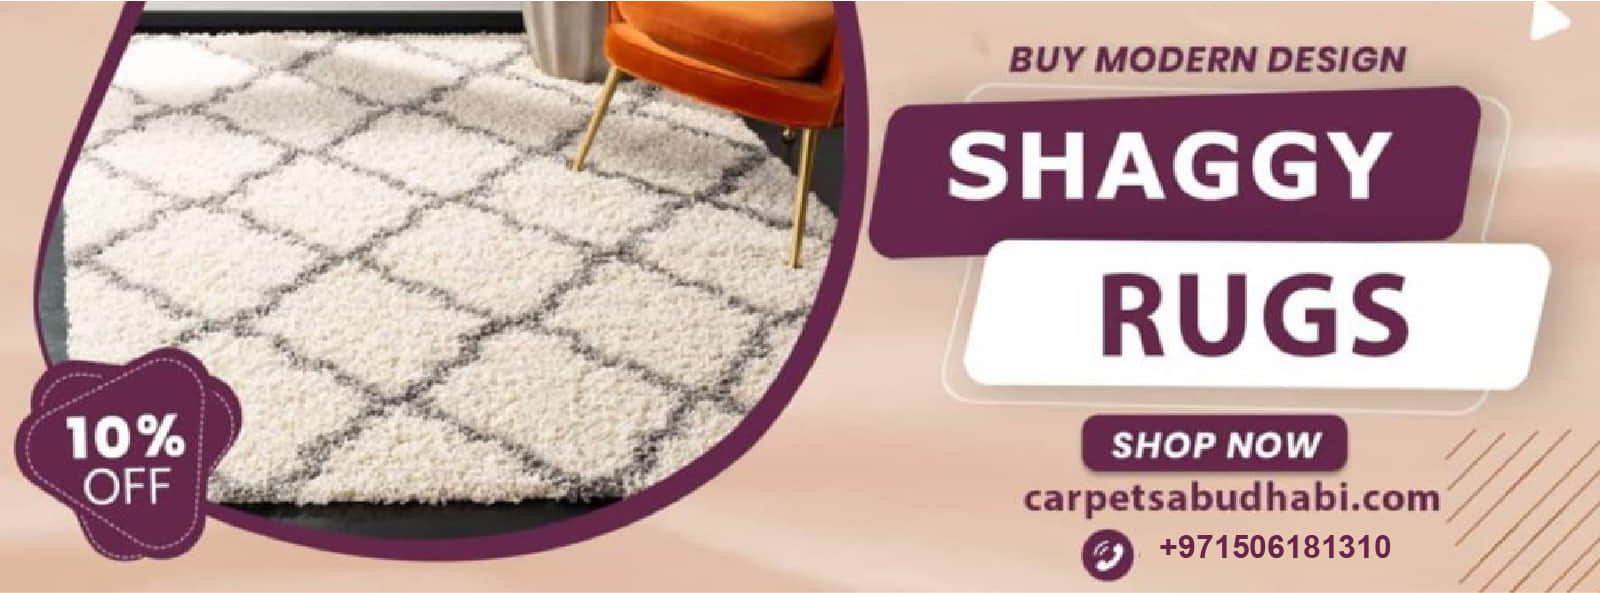 shaggy rugs 1